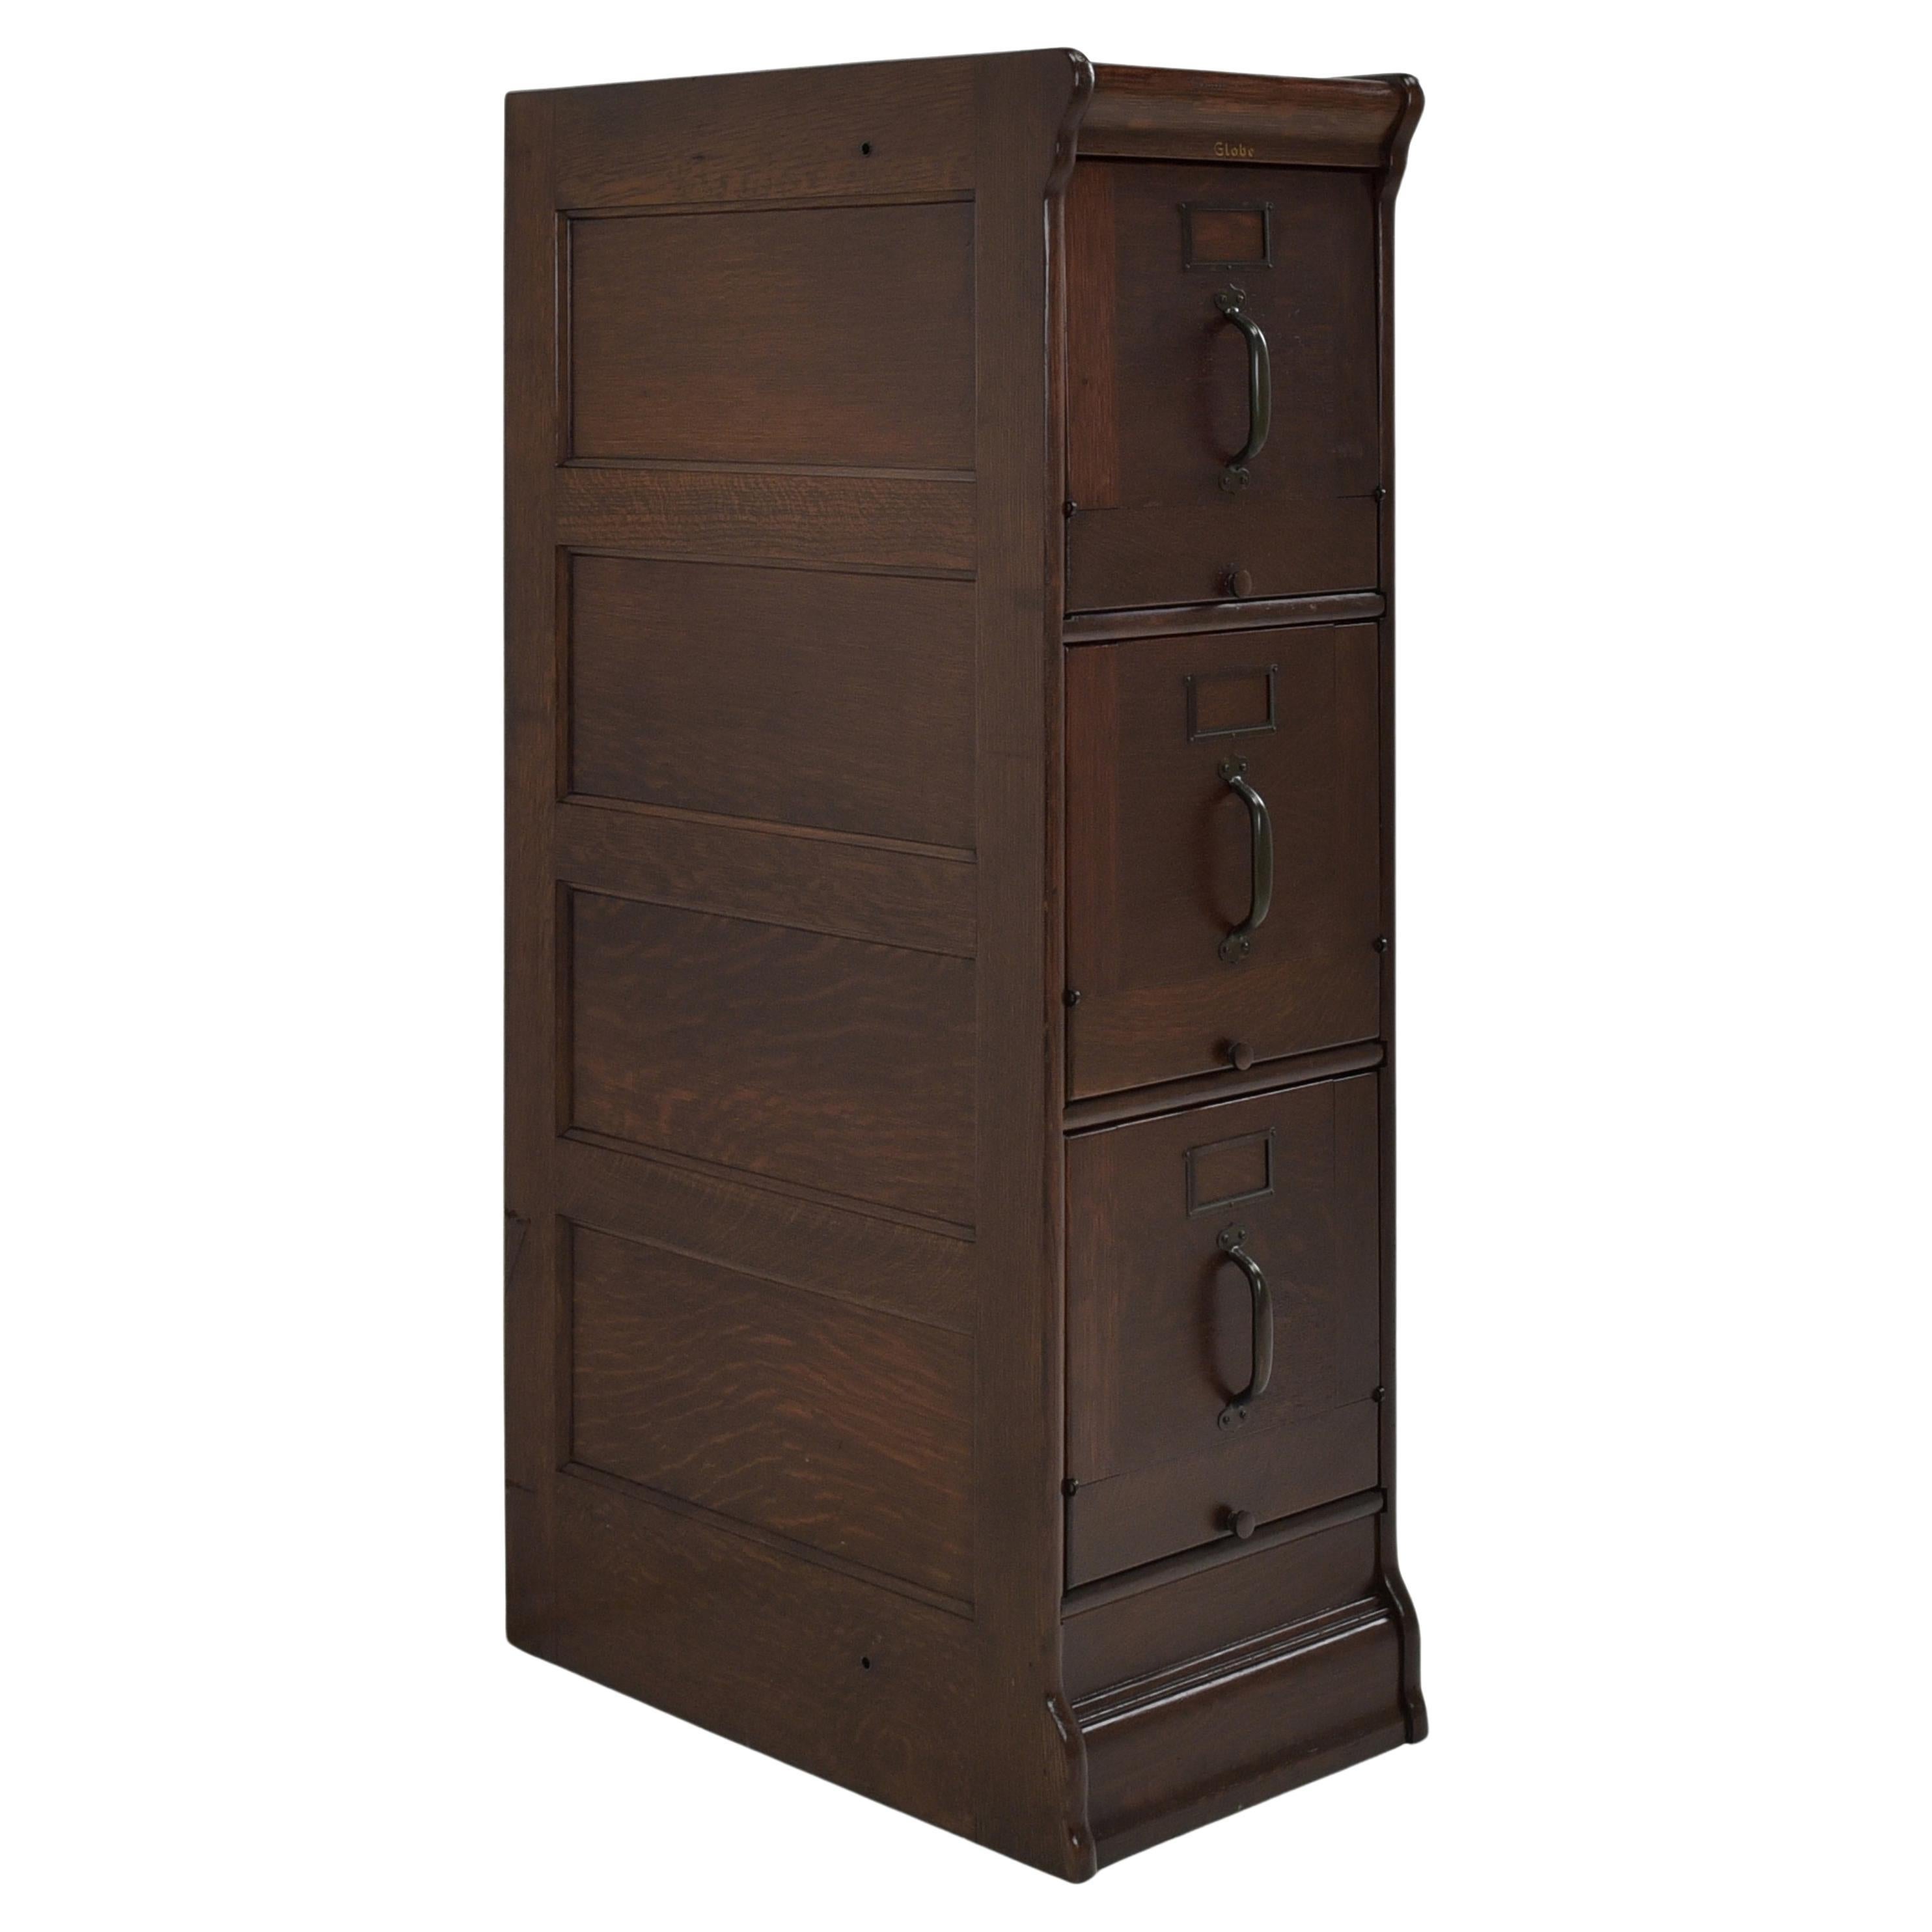 1930 restored Globe-Wernicke filing cabinet oak drawer cabinet antique